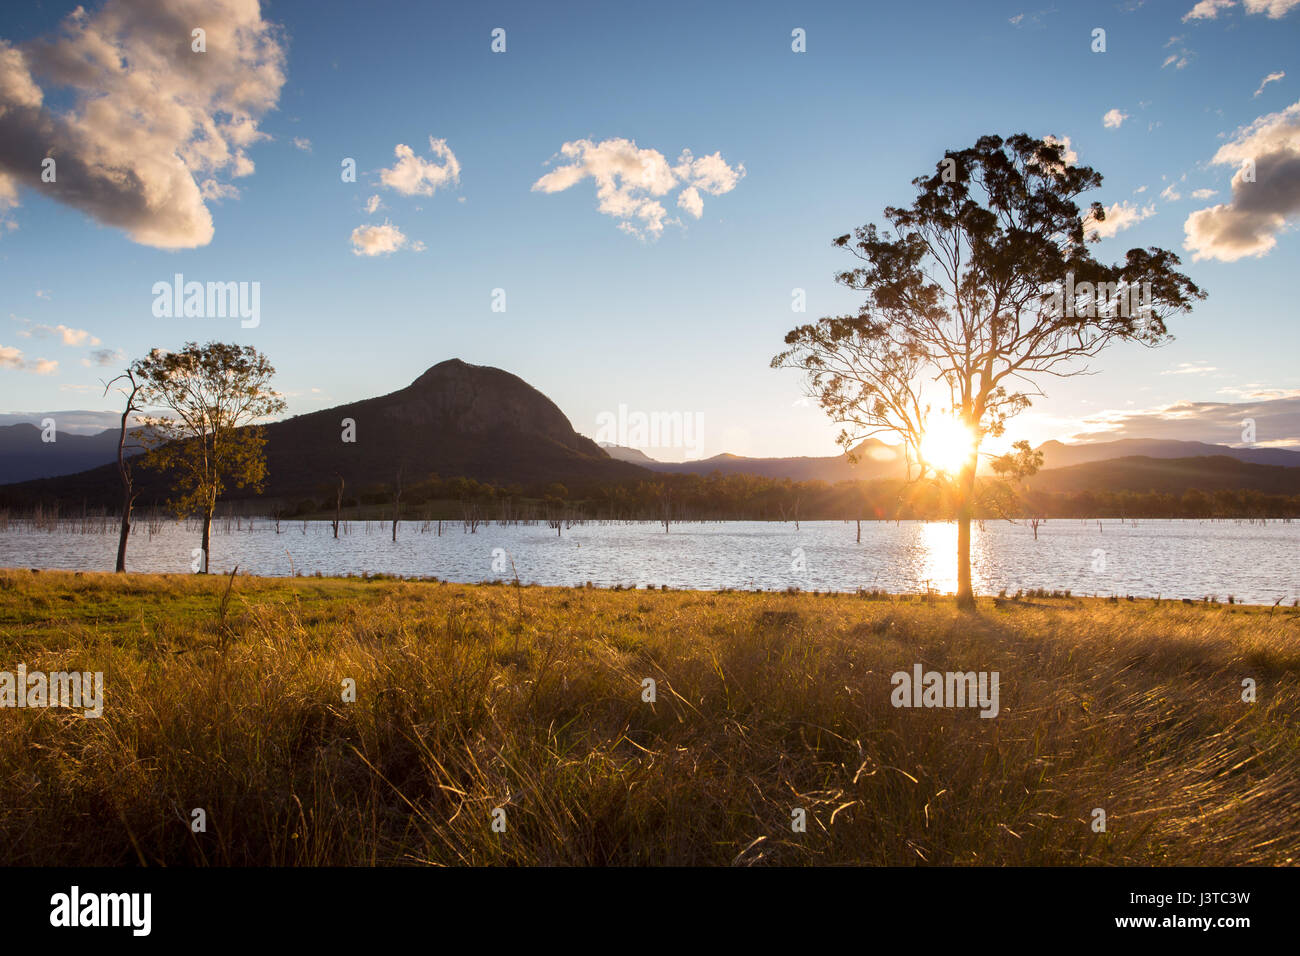 Beaudesert australia hi-res stock photography and images - Alamy